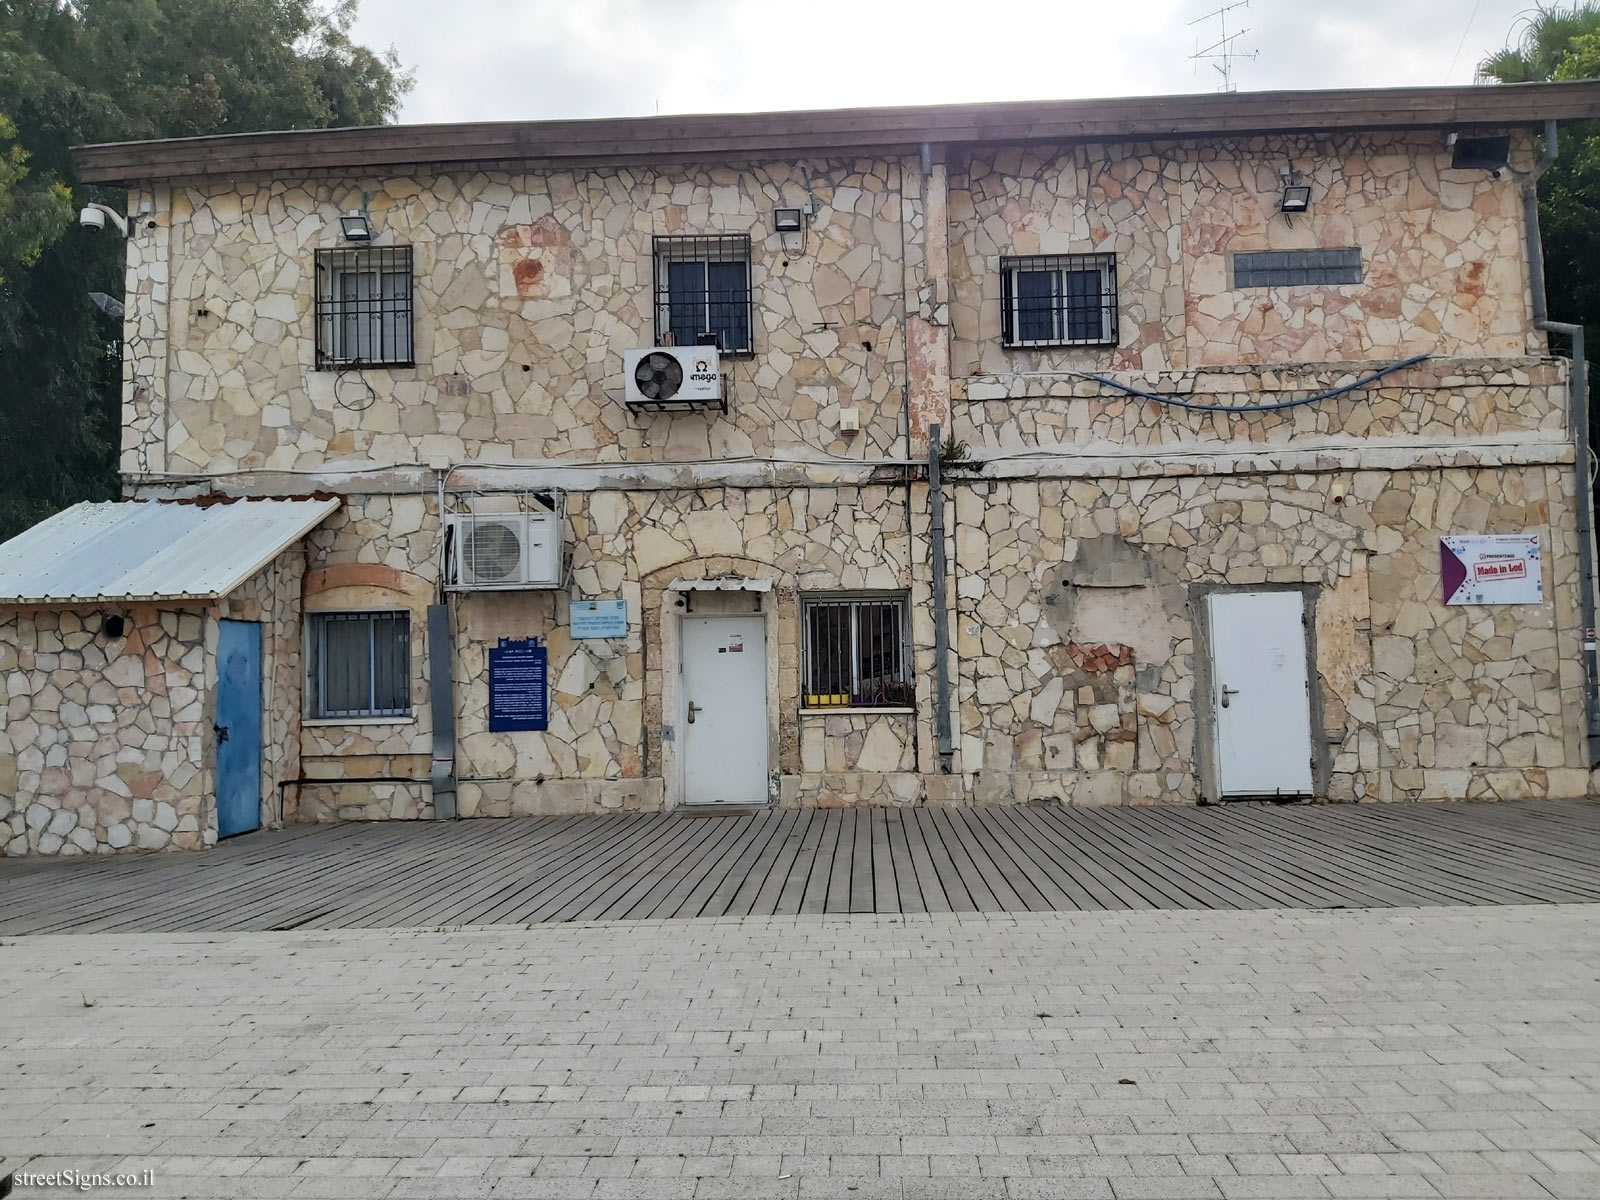 Heritage Sites in Israel - Ottoman train station - Gertbul St 2, Lod, Israel